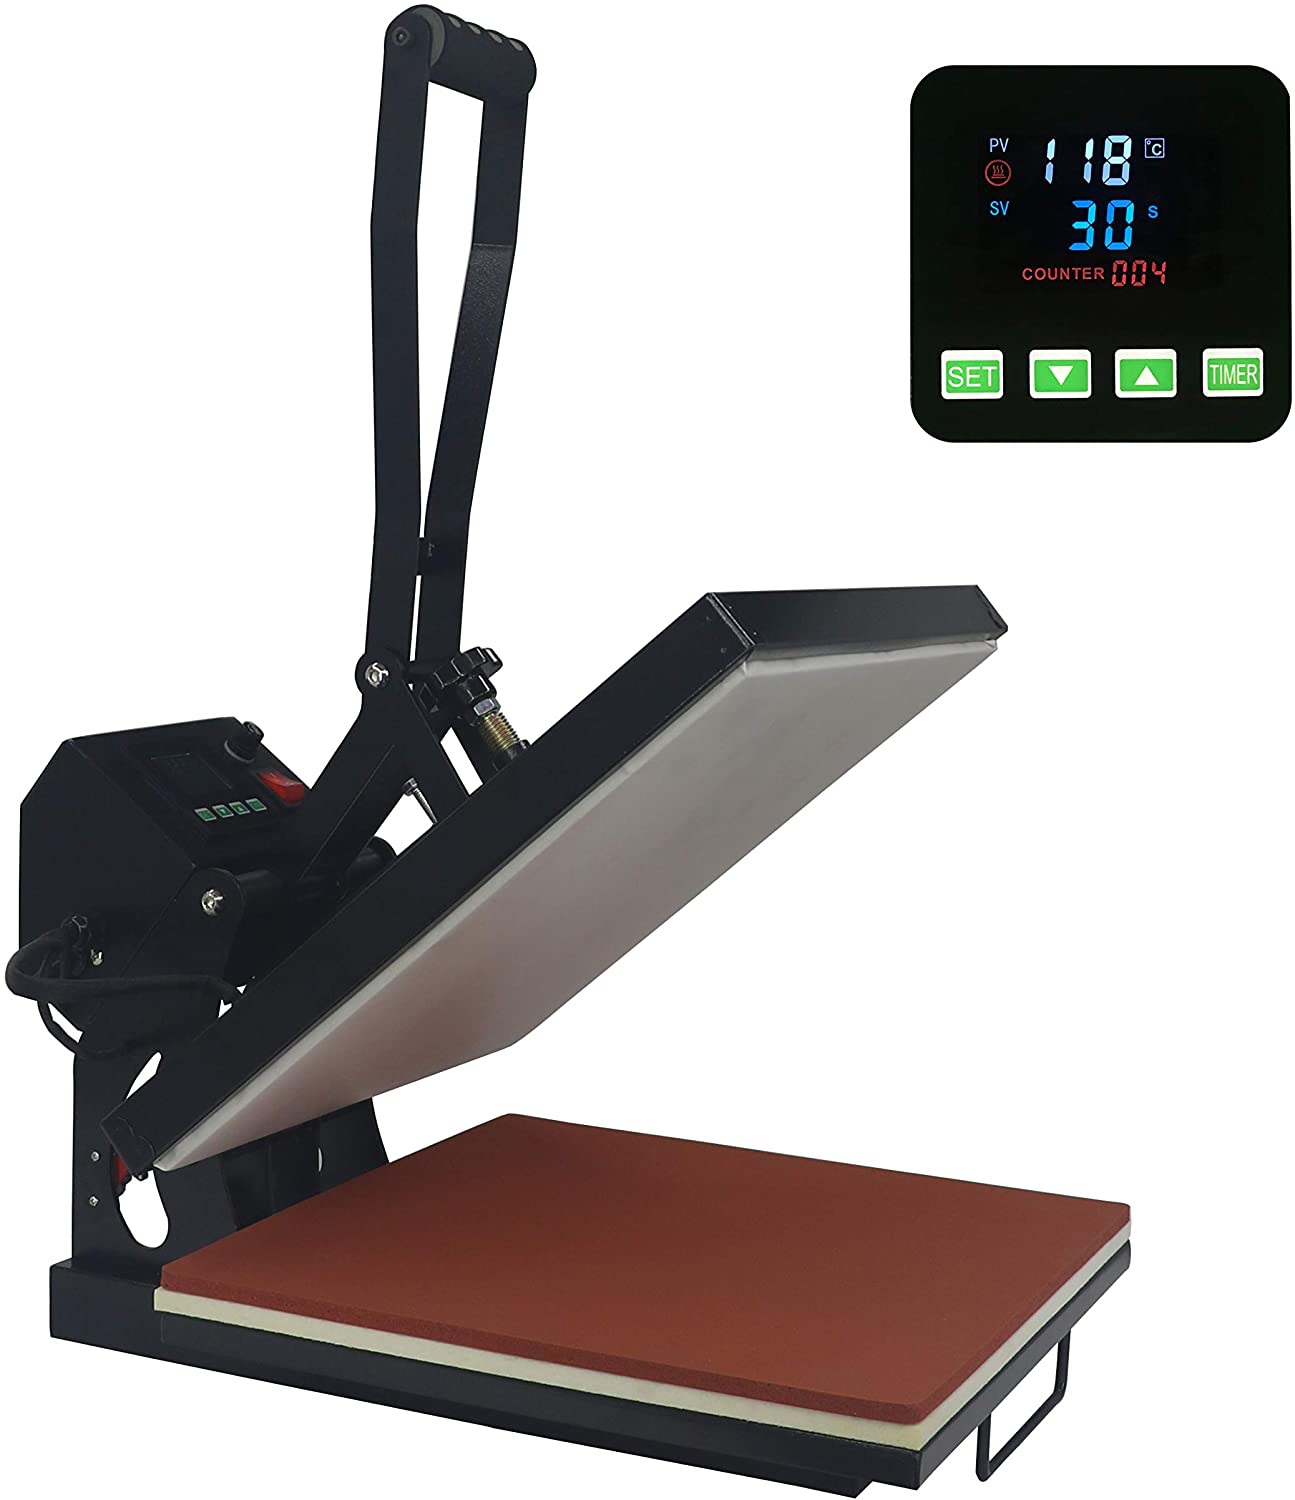 RoyalPress 15" x 15" Color LED Industrial-Quality Digital Sublimation Heat Transfer Machine T-Shirt Heat Press Machine, 15" x 15", Black